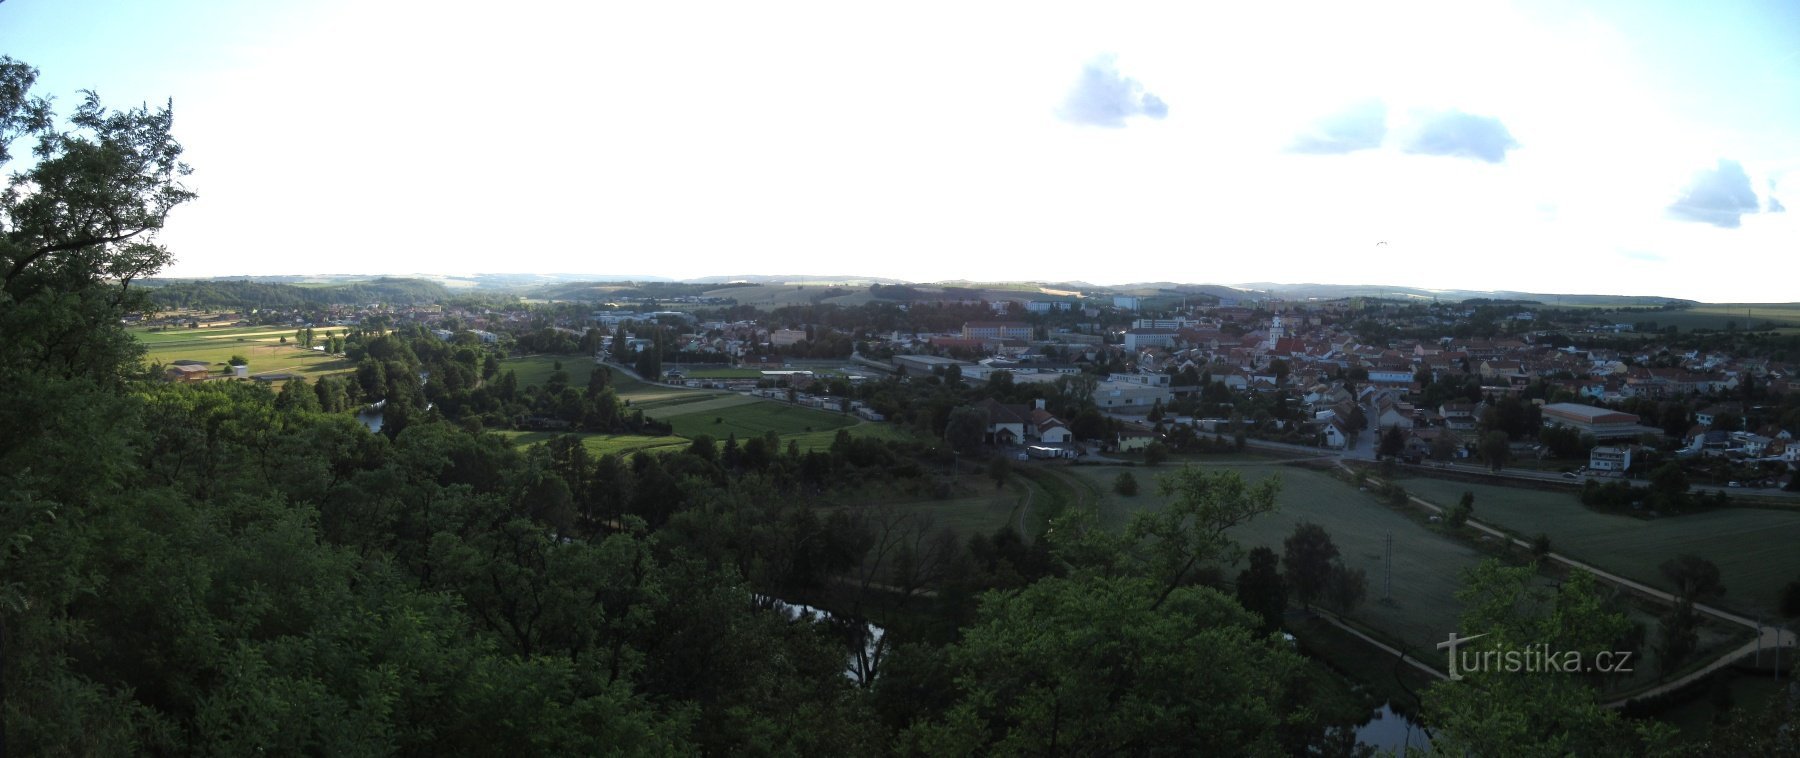 Ivančice - 莱茵河畔 - Alfons Mucha (Réna) 的堡垒、公园和瞭望塔